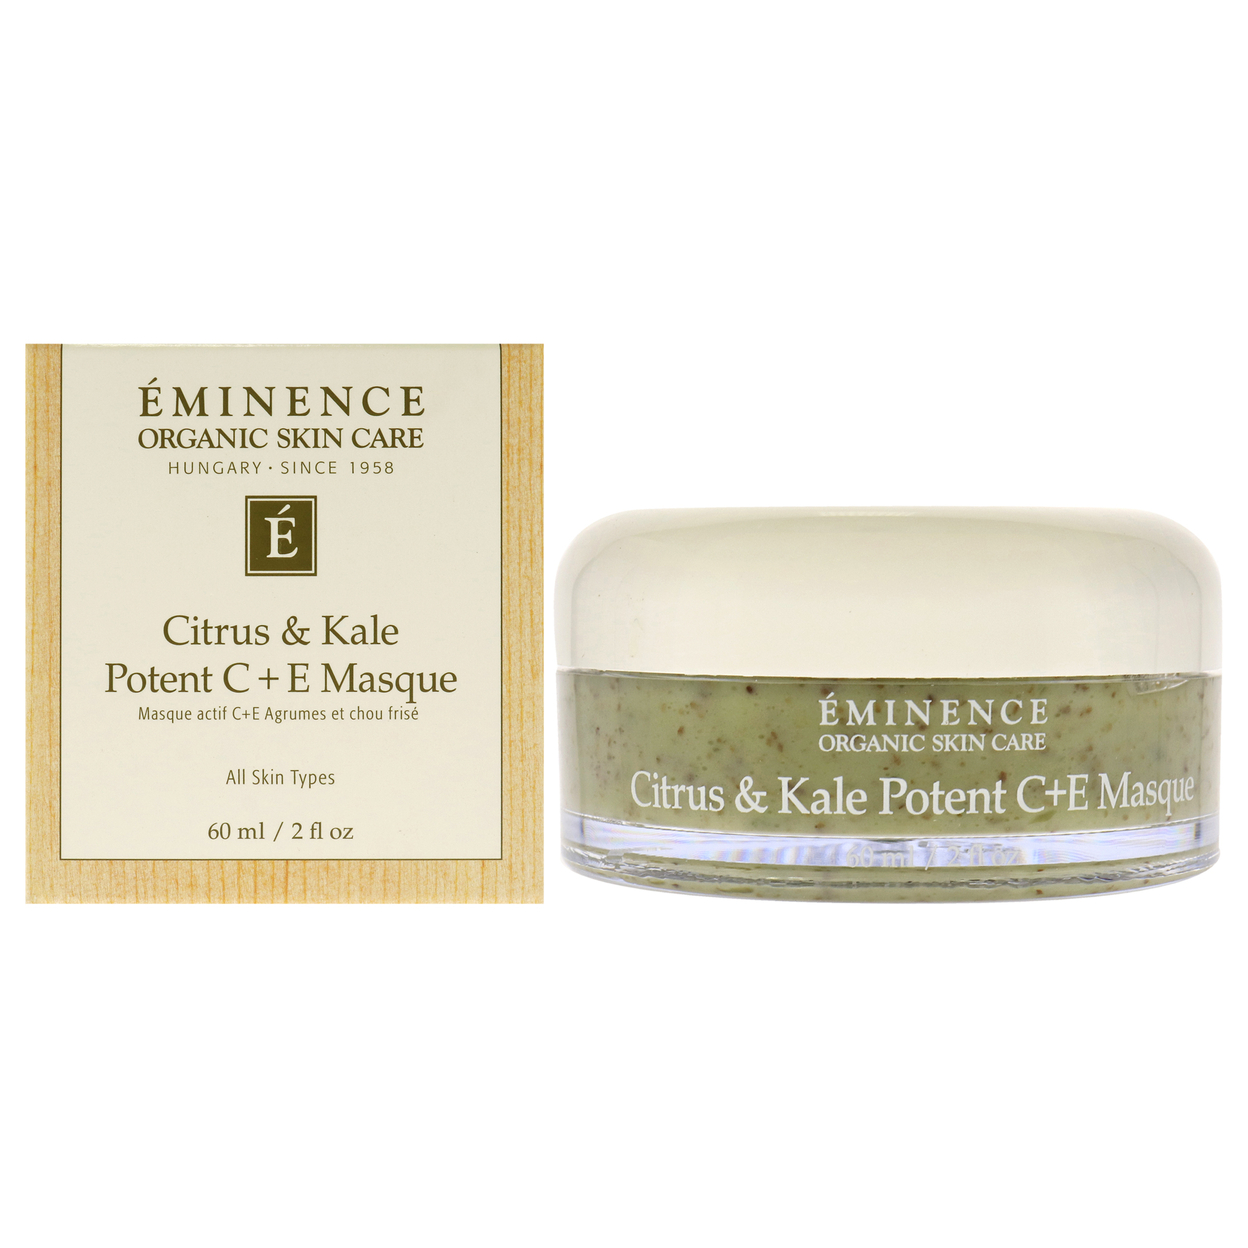 Eminence Citrus And Kale Potent C And E Masque Mask 2 Oz